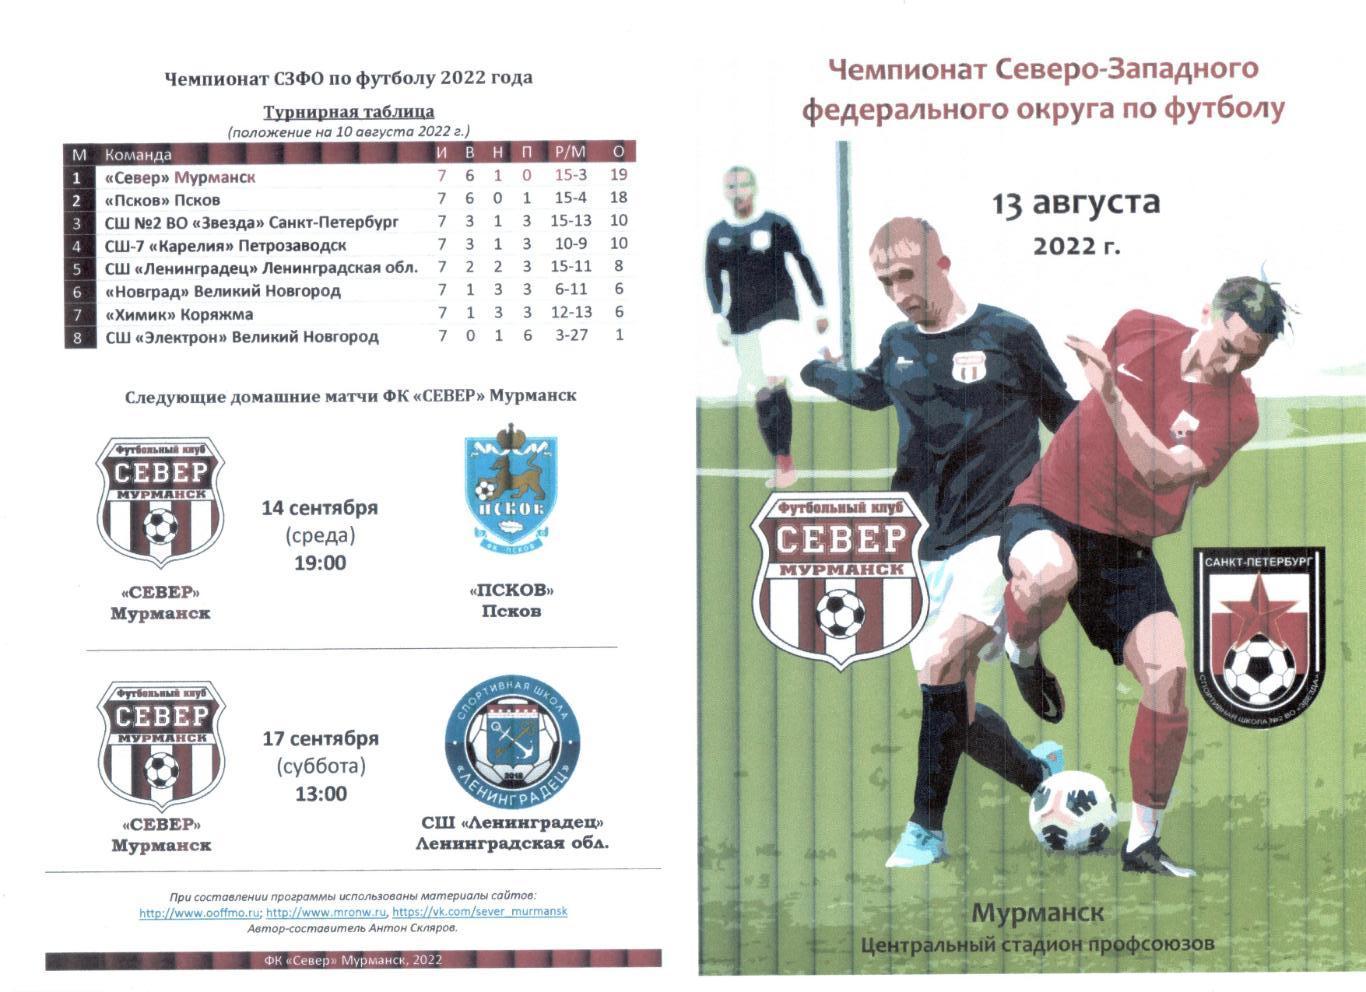 Чемпионат СЗФО по футболу 2022 Север Мурманск - СШ 2 ВО Звезда (Санкт-Петербург)